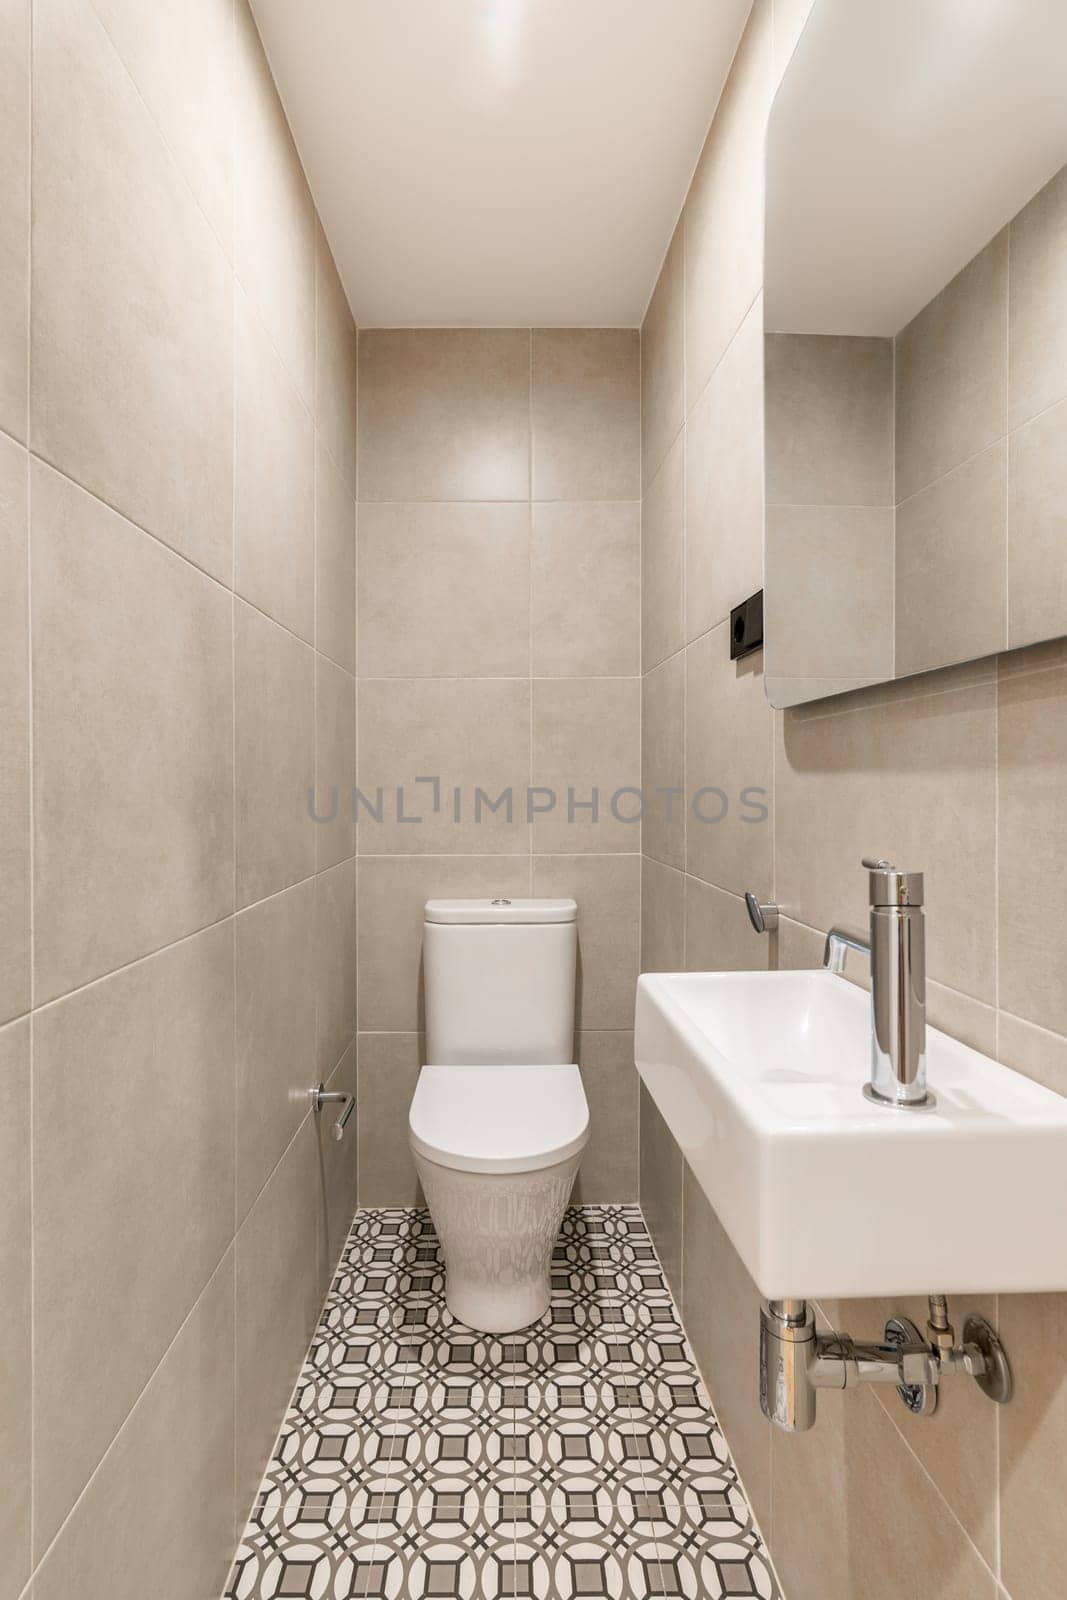 Narrow vanity area with toilet bowl washbasin and mirror by apavlin